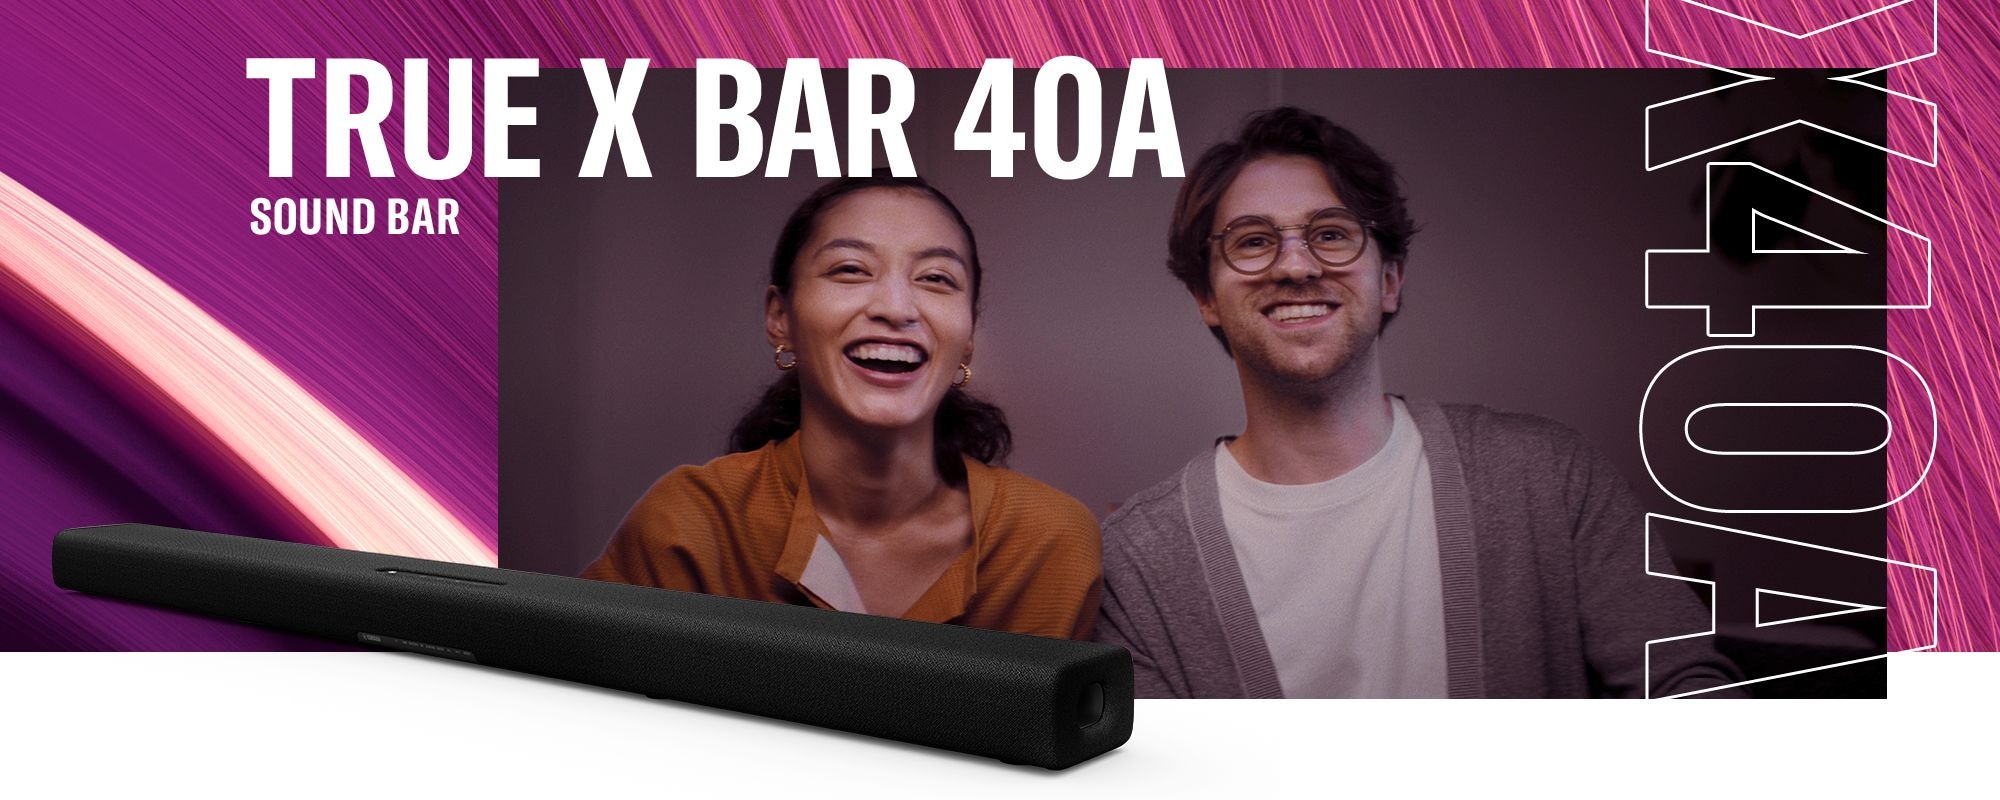 TRUE X BAR 40A Dolby Atmos Yamaha Bar Sound - USA